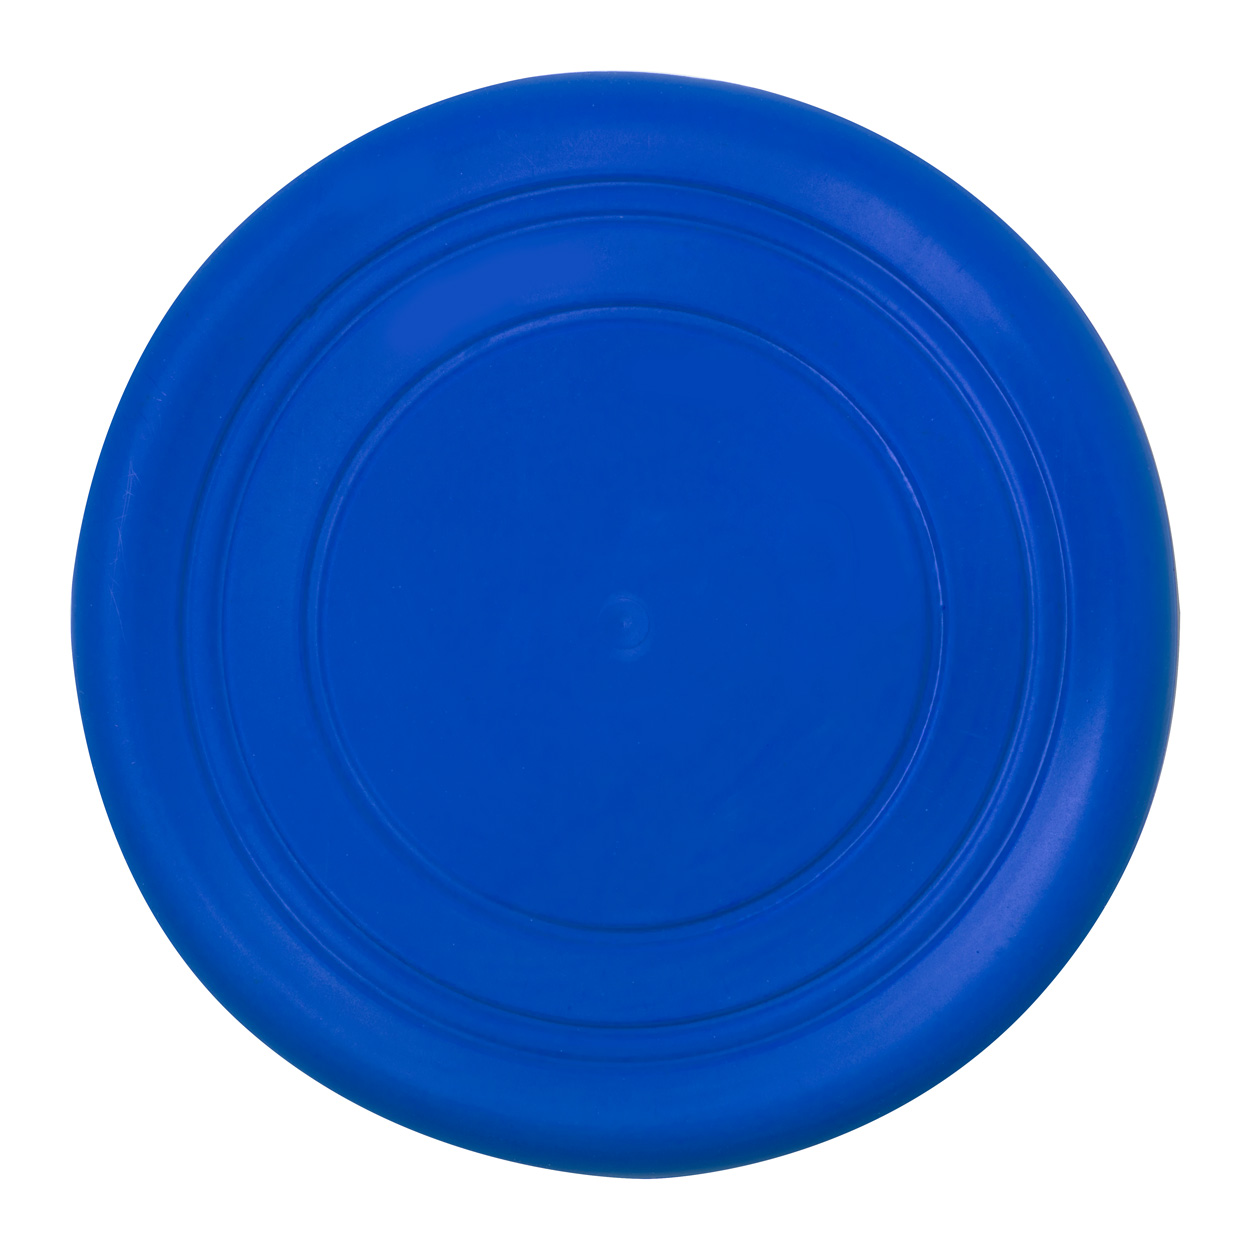 Giraud frisbee - blue